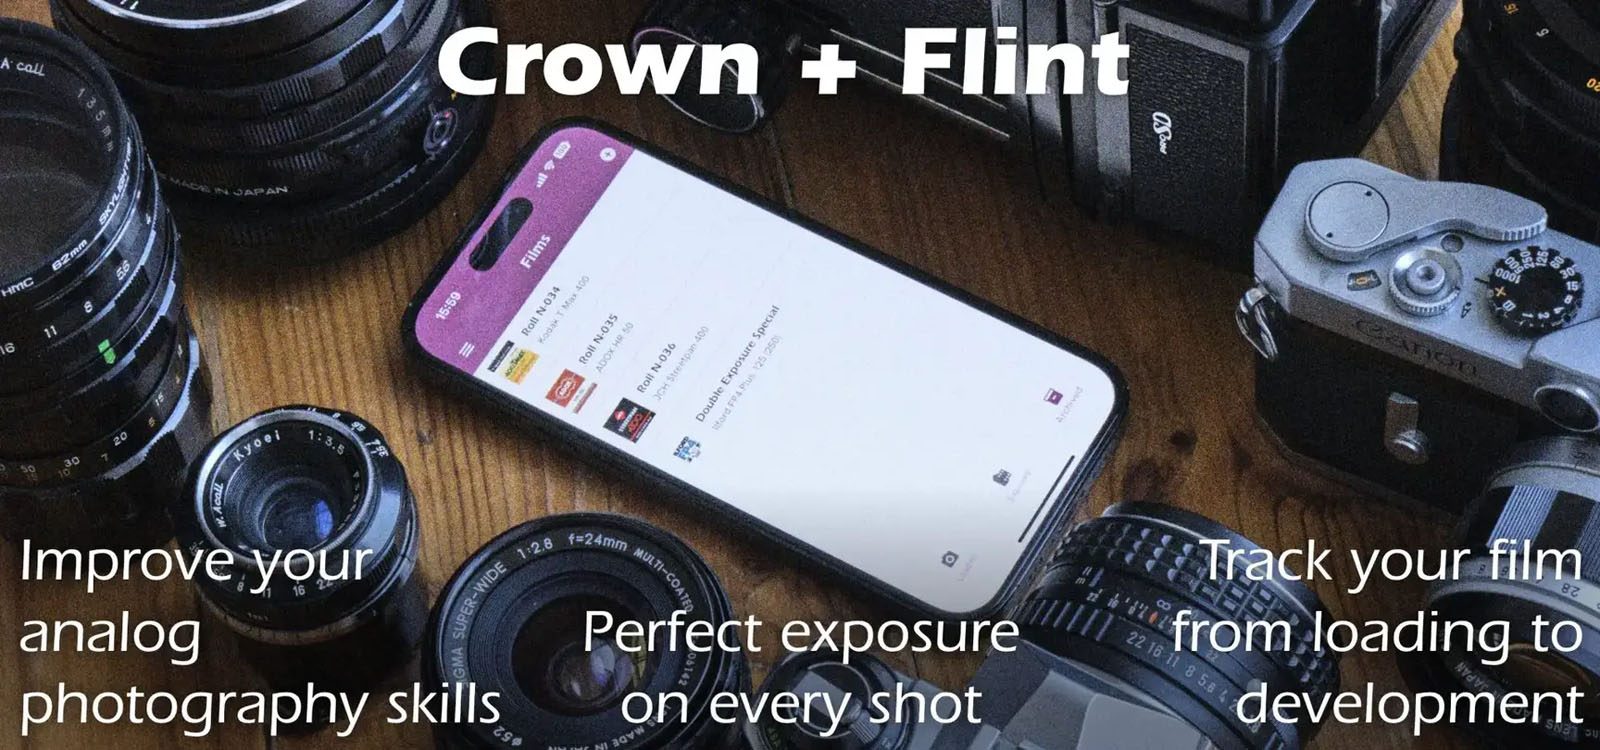 Crown + Flint photography app